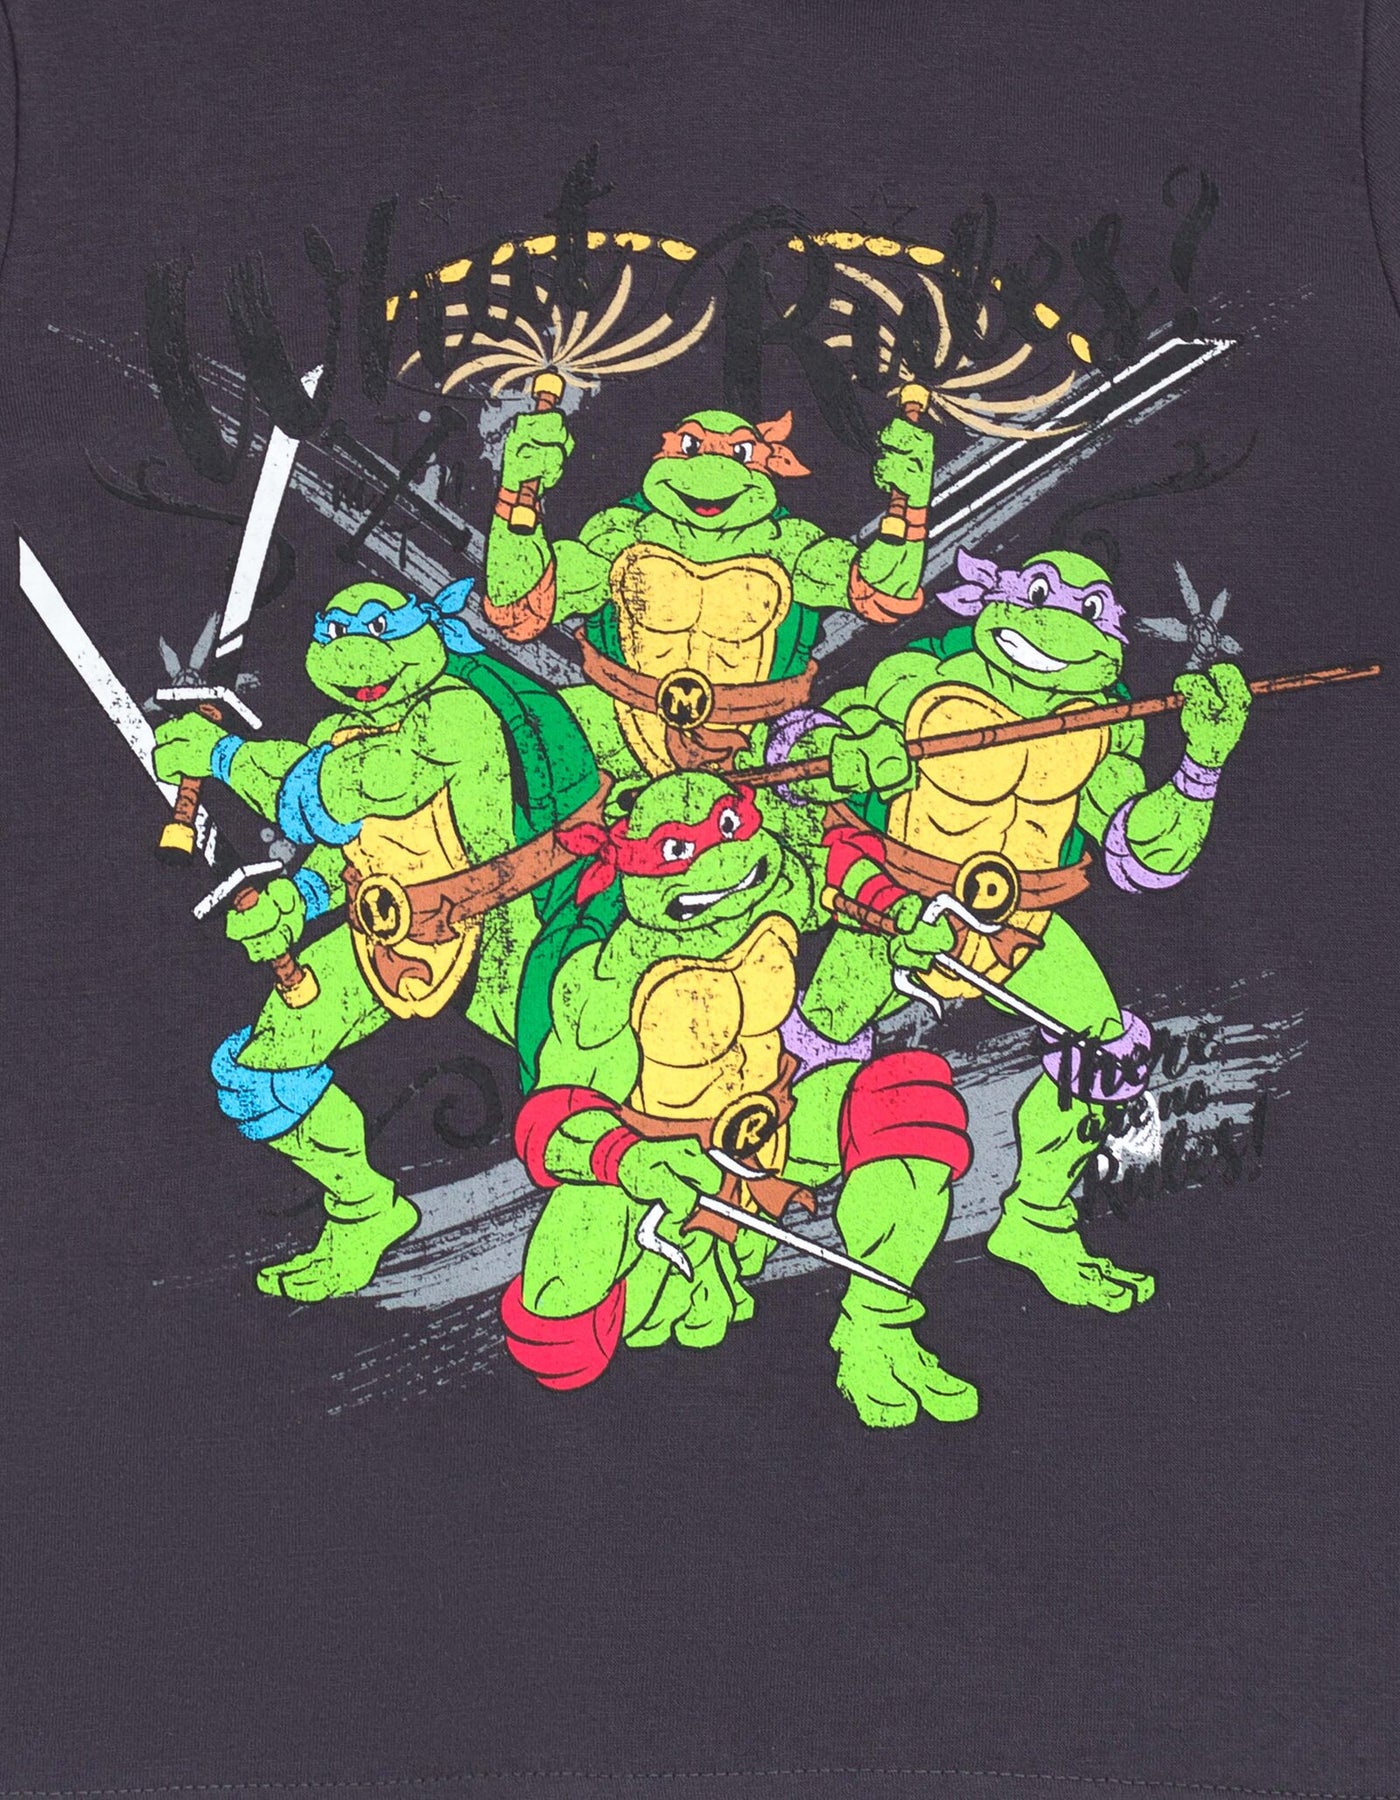 Teenage Mutant Ninja Turtles T-Shirt and Mesh Shorts Outfit Set